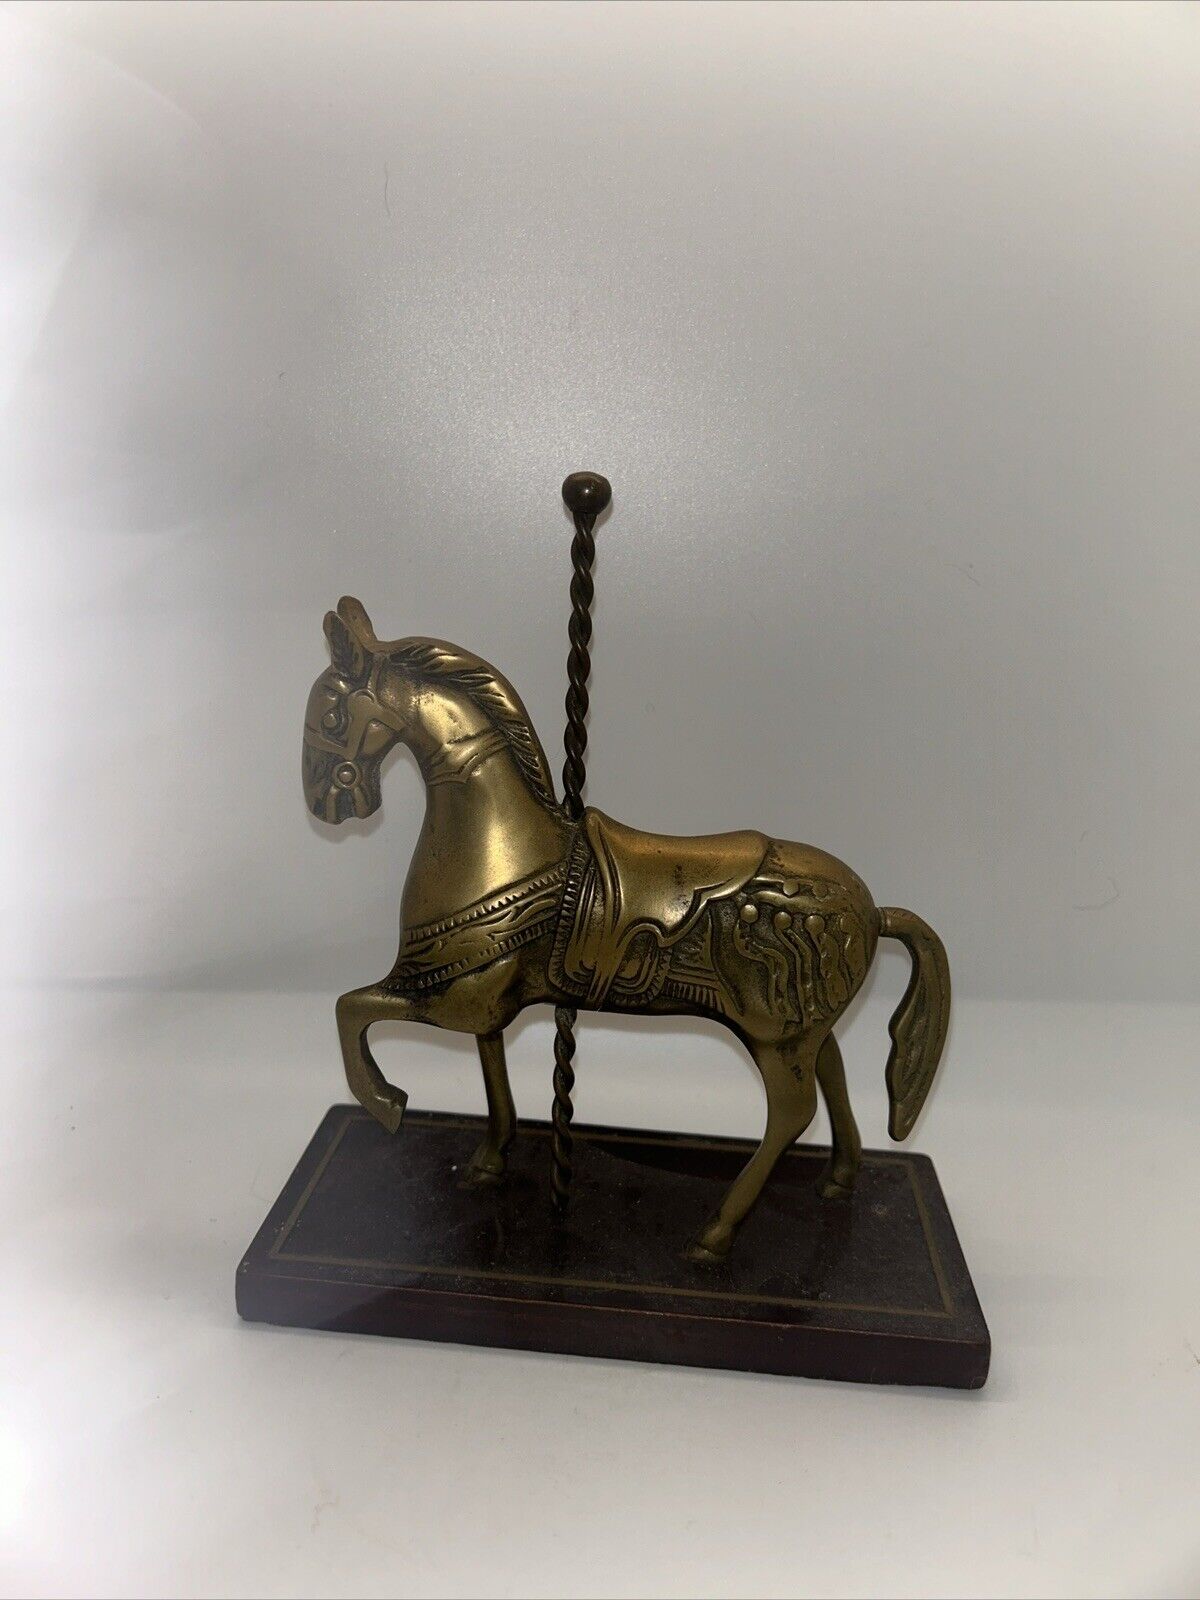 VTG Brass Carousel Horse Figurine Solid Wooden Base Brass Horse Statue 7” X 9”